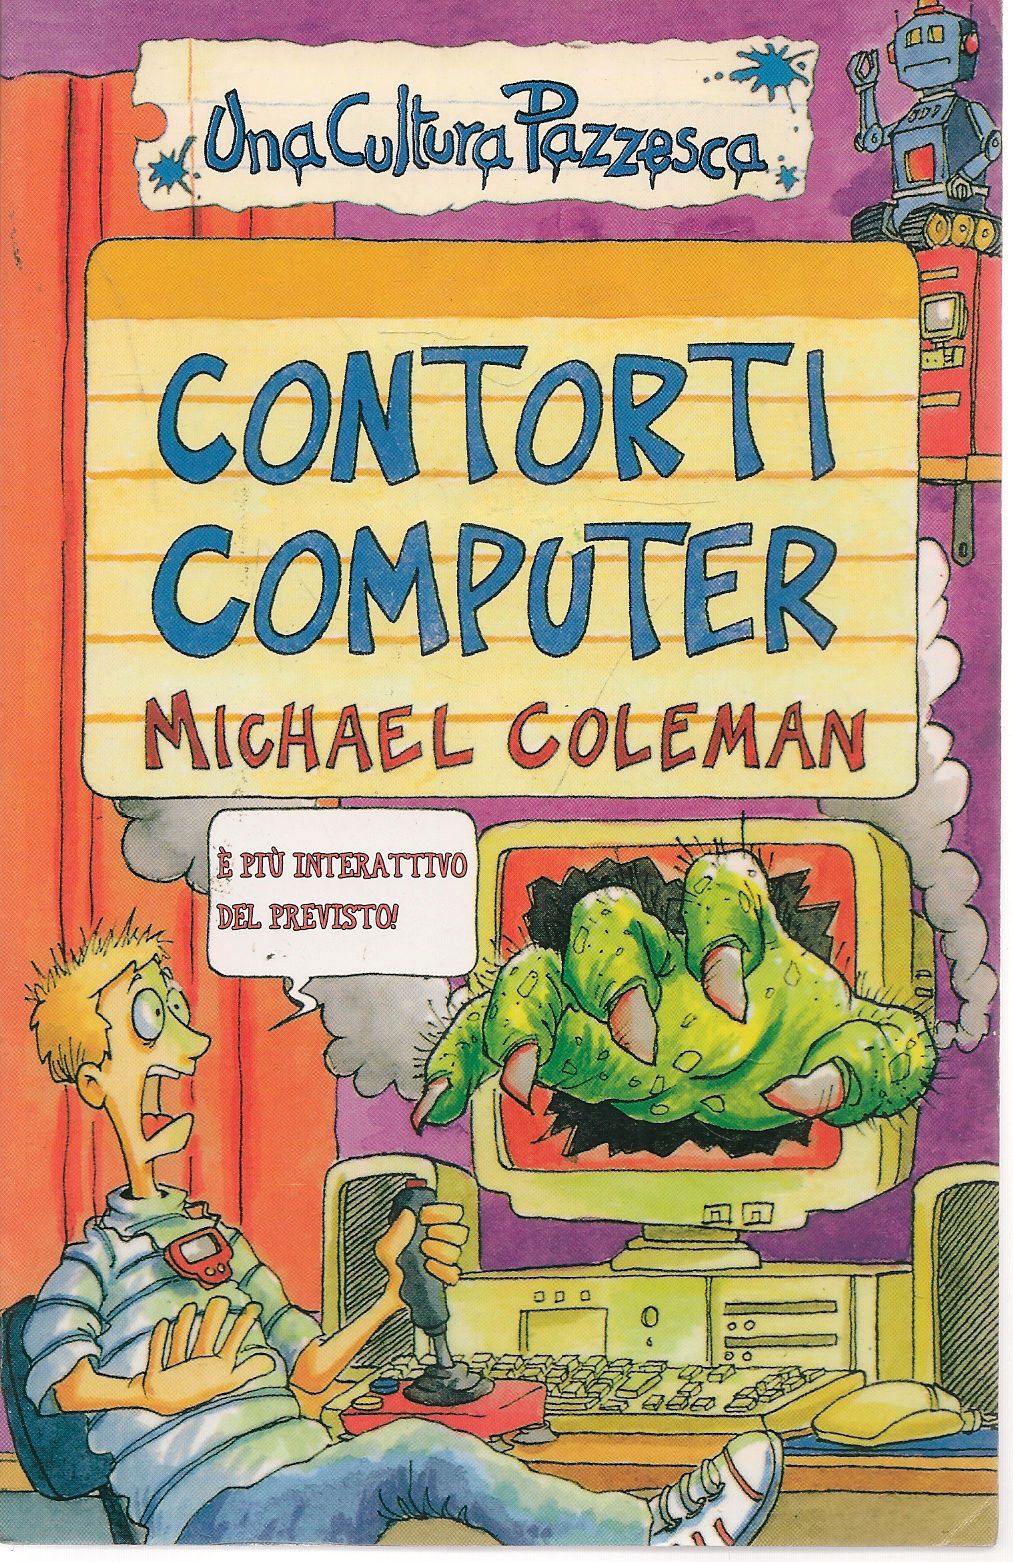 CONTORTI COMPUTER - MICHAEL COLEMAN